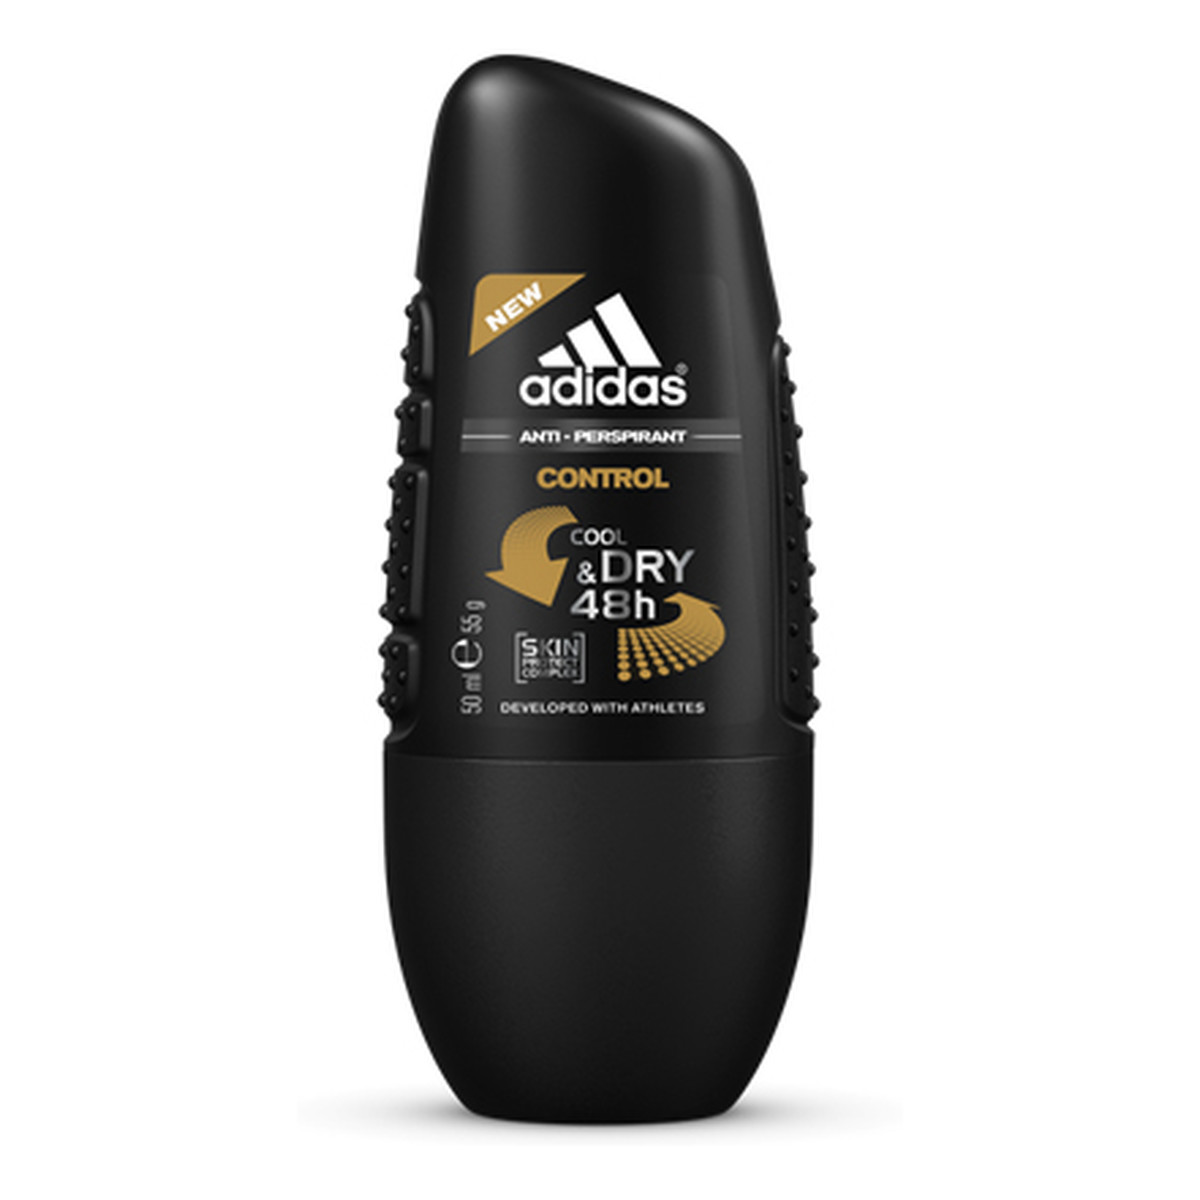 Adidas Cool & Dry Men Antyperspirant Roll On Control 50ml